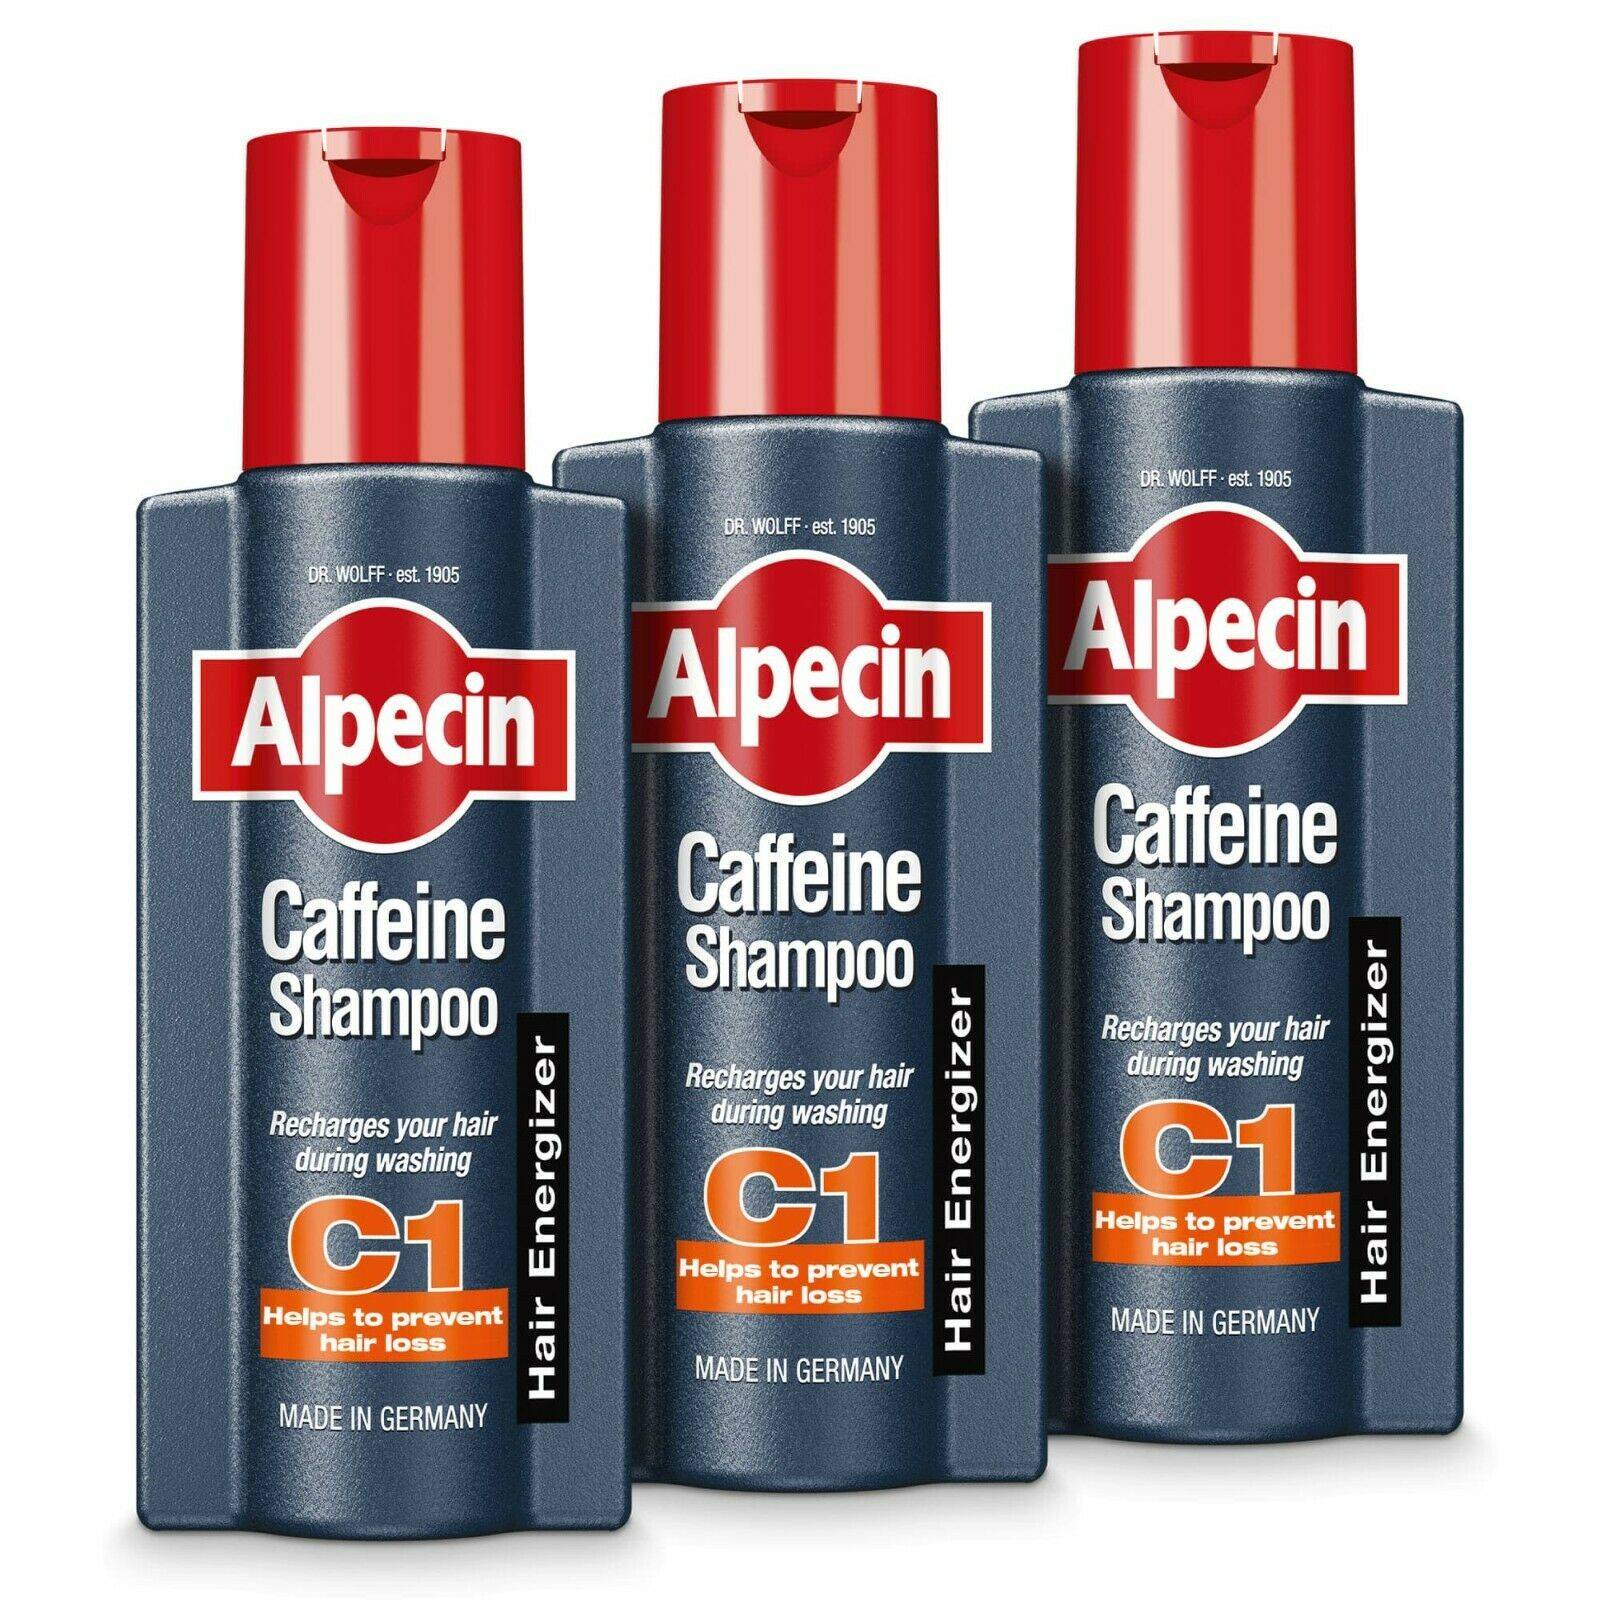 Alpecin Caffeine Shampoo C1 | Prevents and Reduces Hair Loss 3 x 250ml